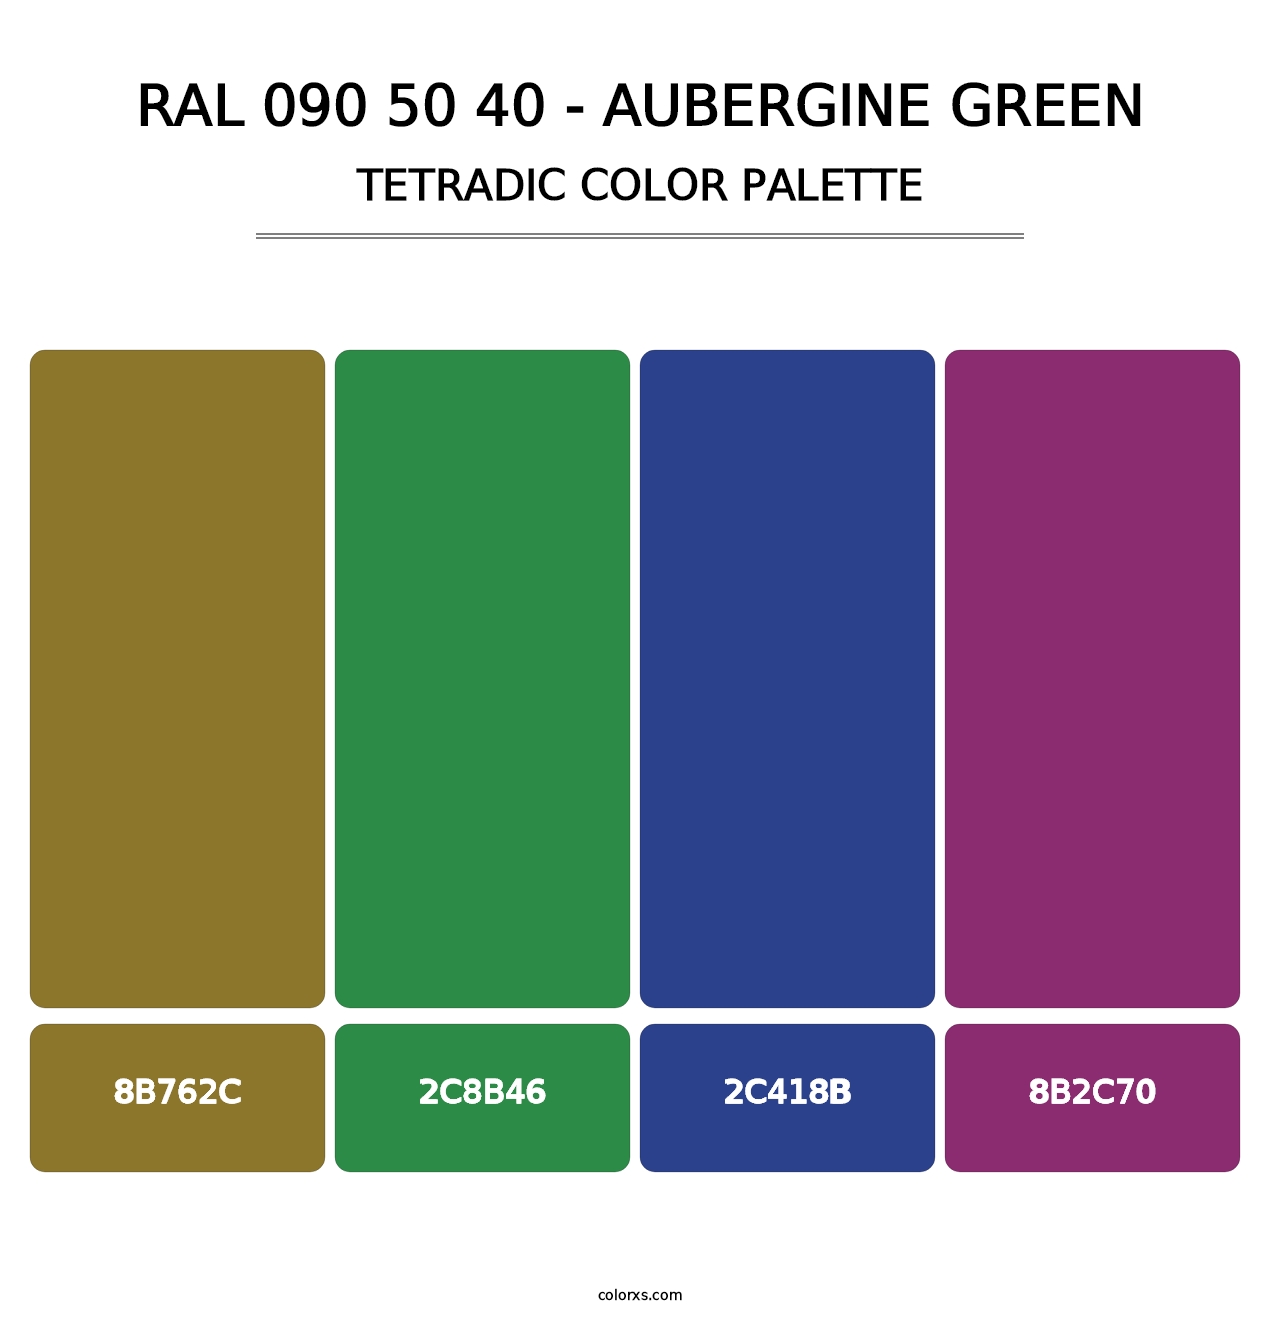 RAL 090 50 40 - Aubergine Green - Tetradic Color Palette